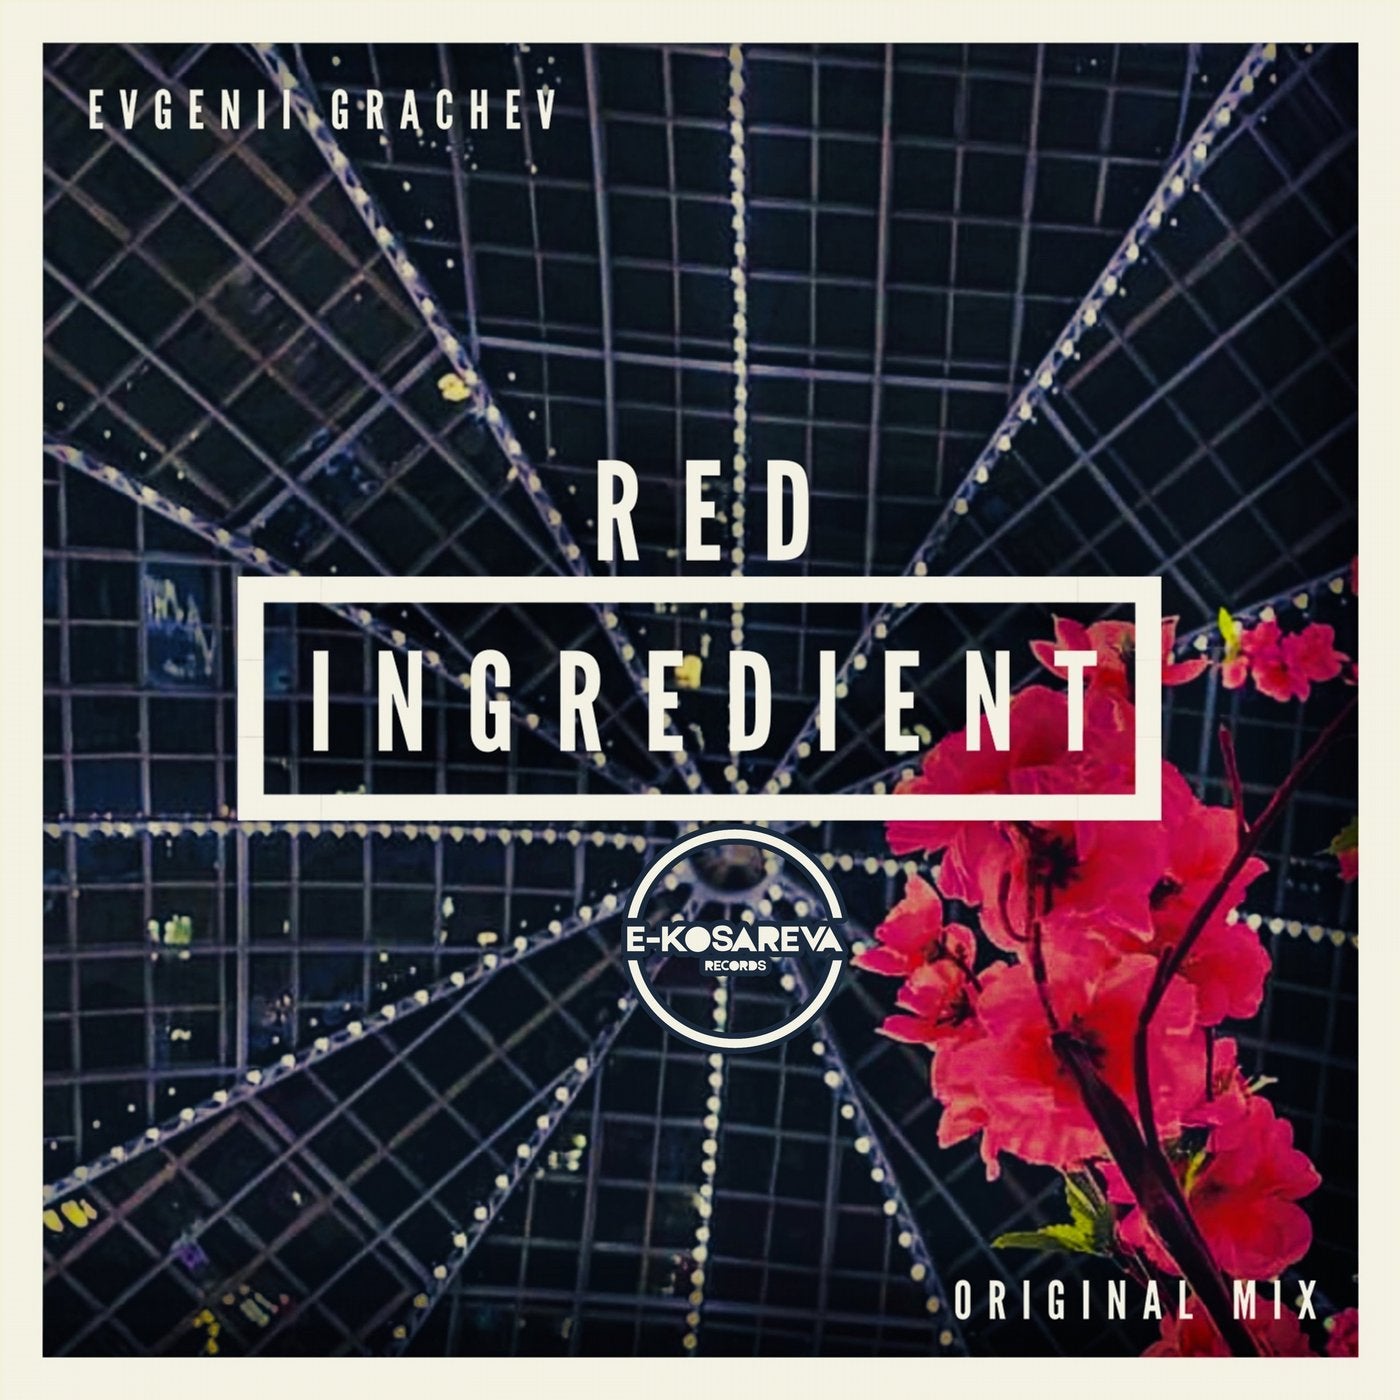 Red ingredient